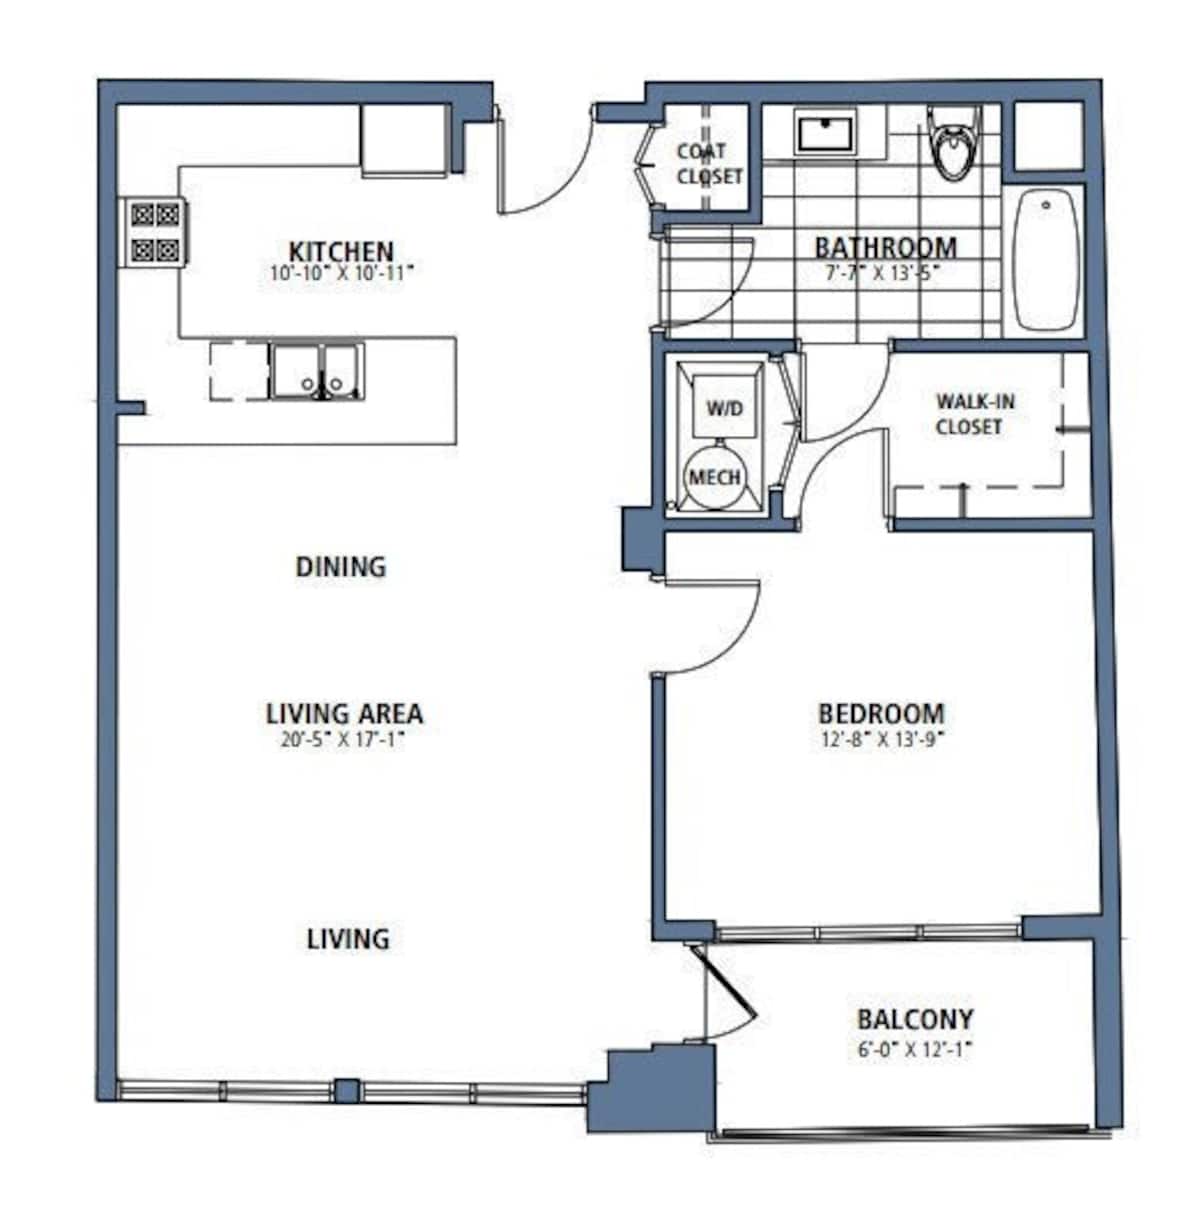 Floorplan diagram for A20, showing 1 bedroom